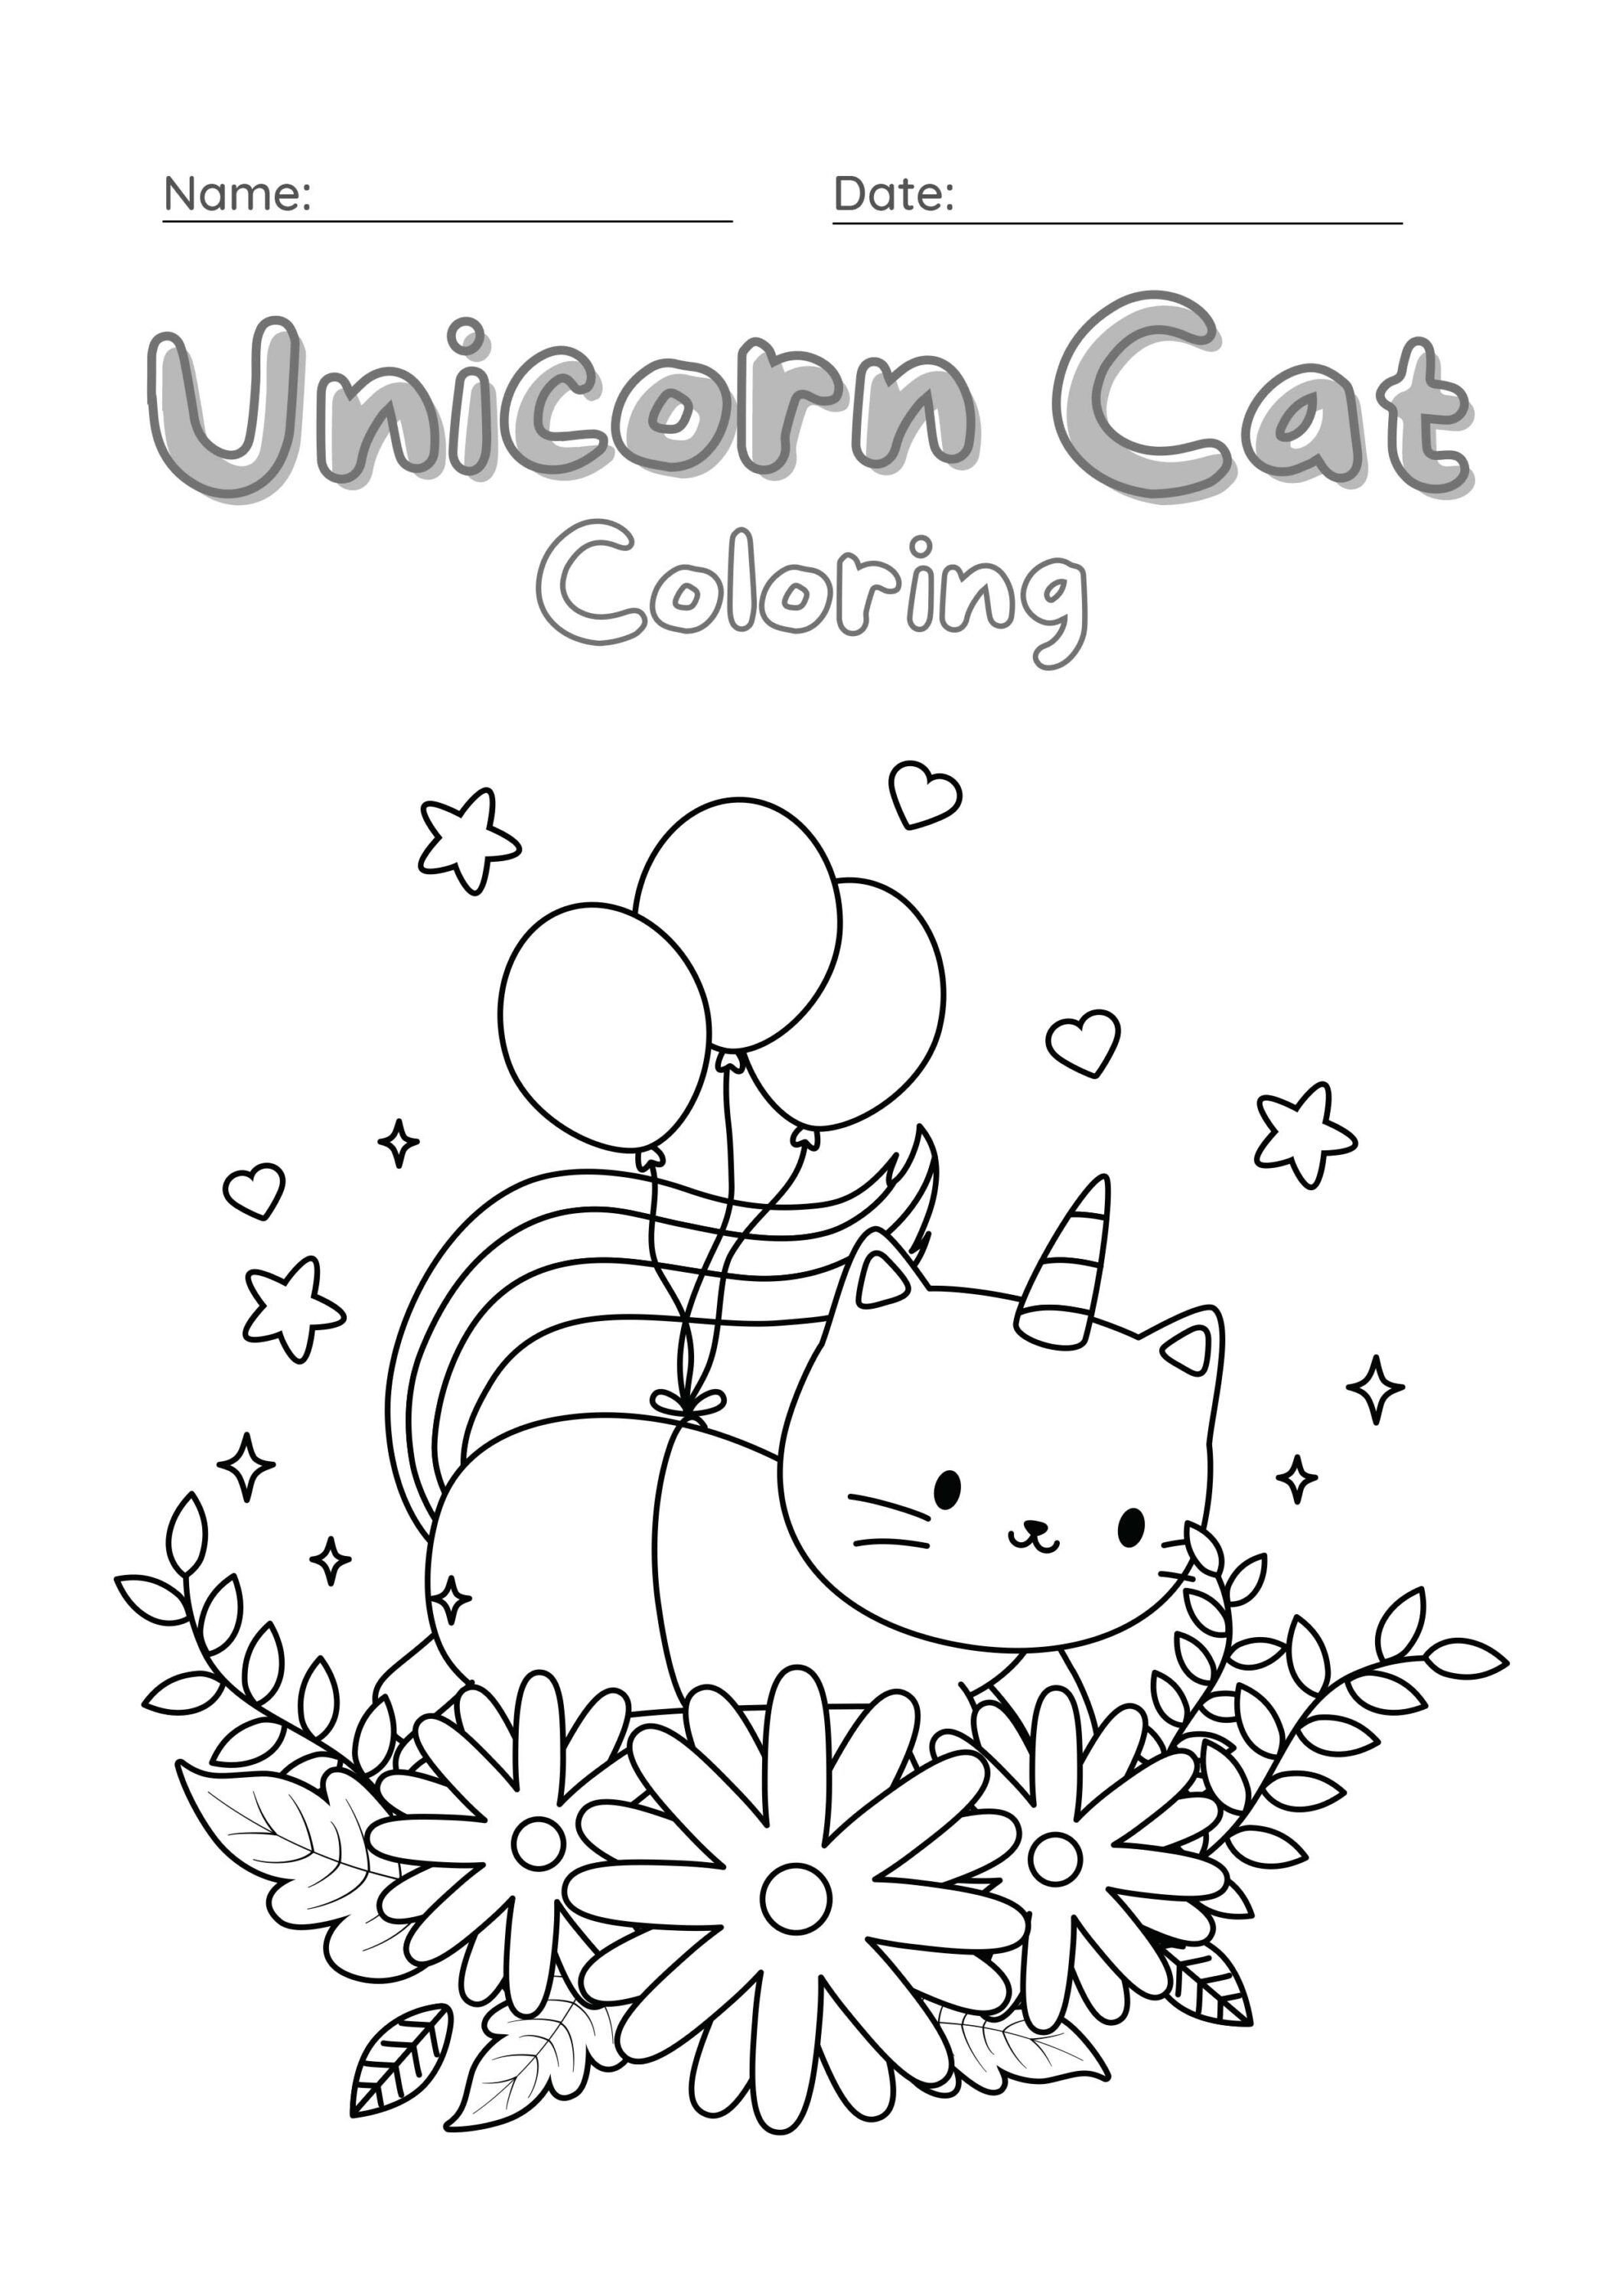 Unicorn Cat Coloring Worksheet Set 20